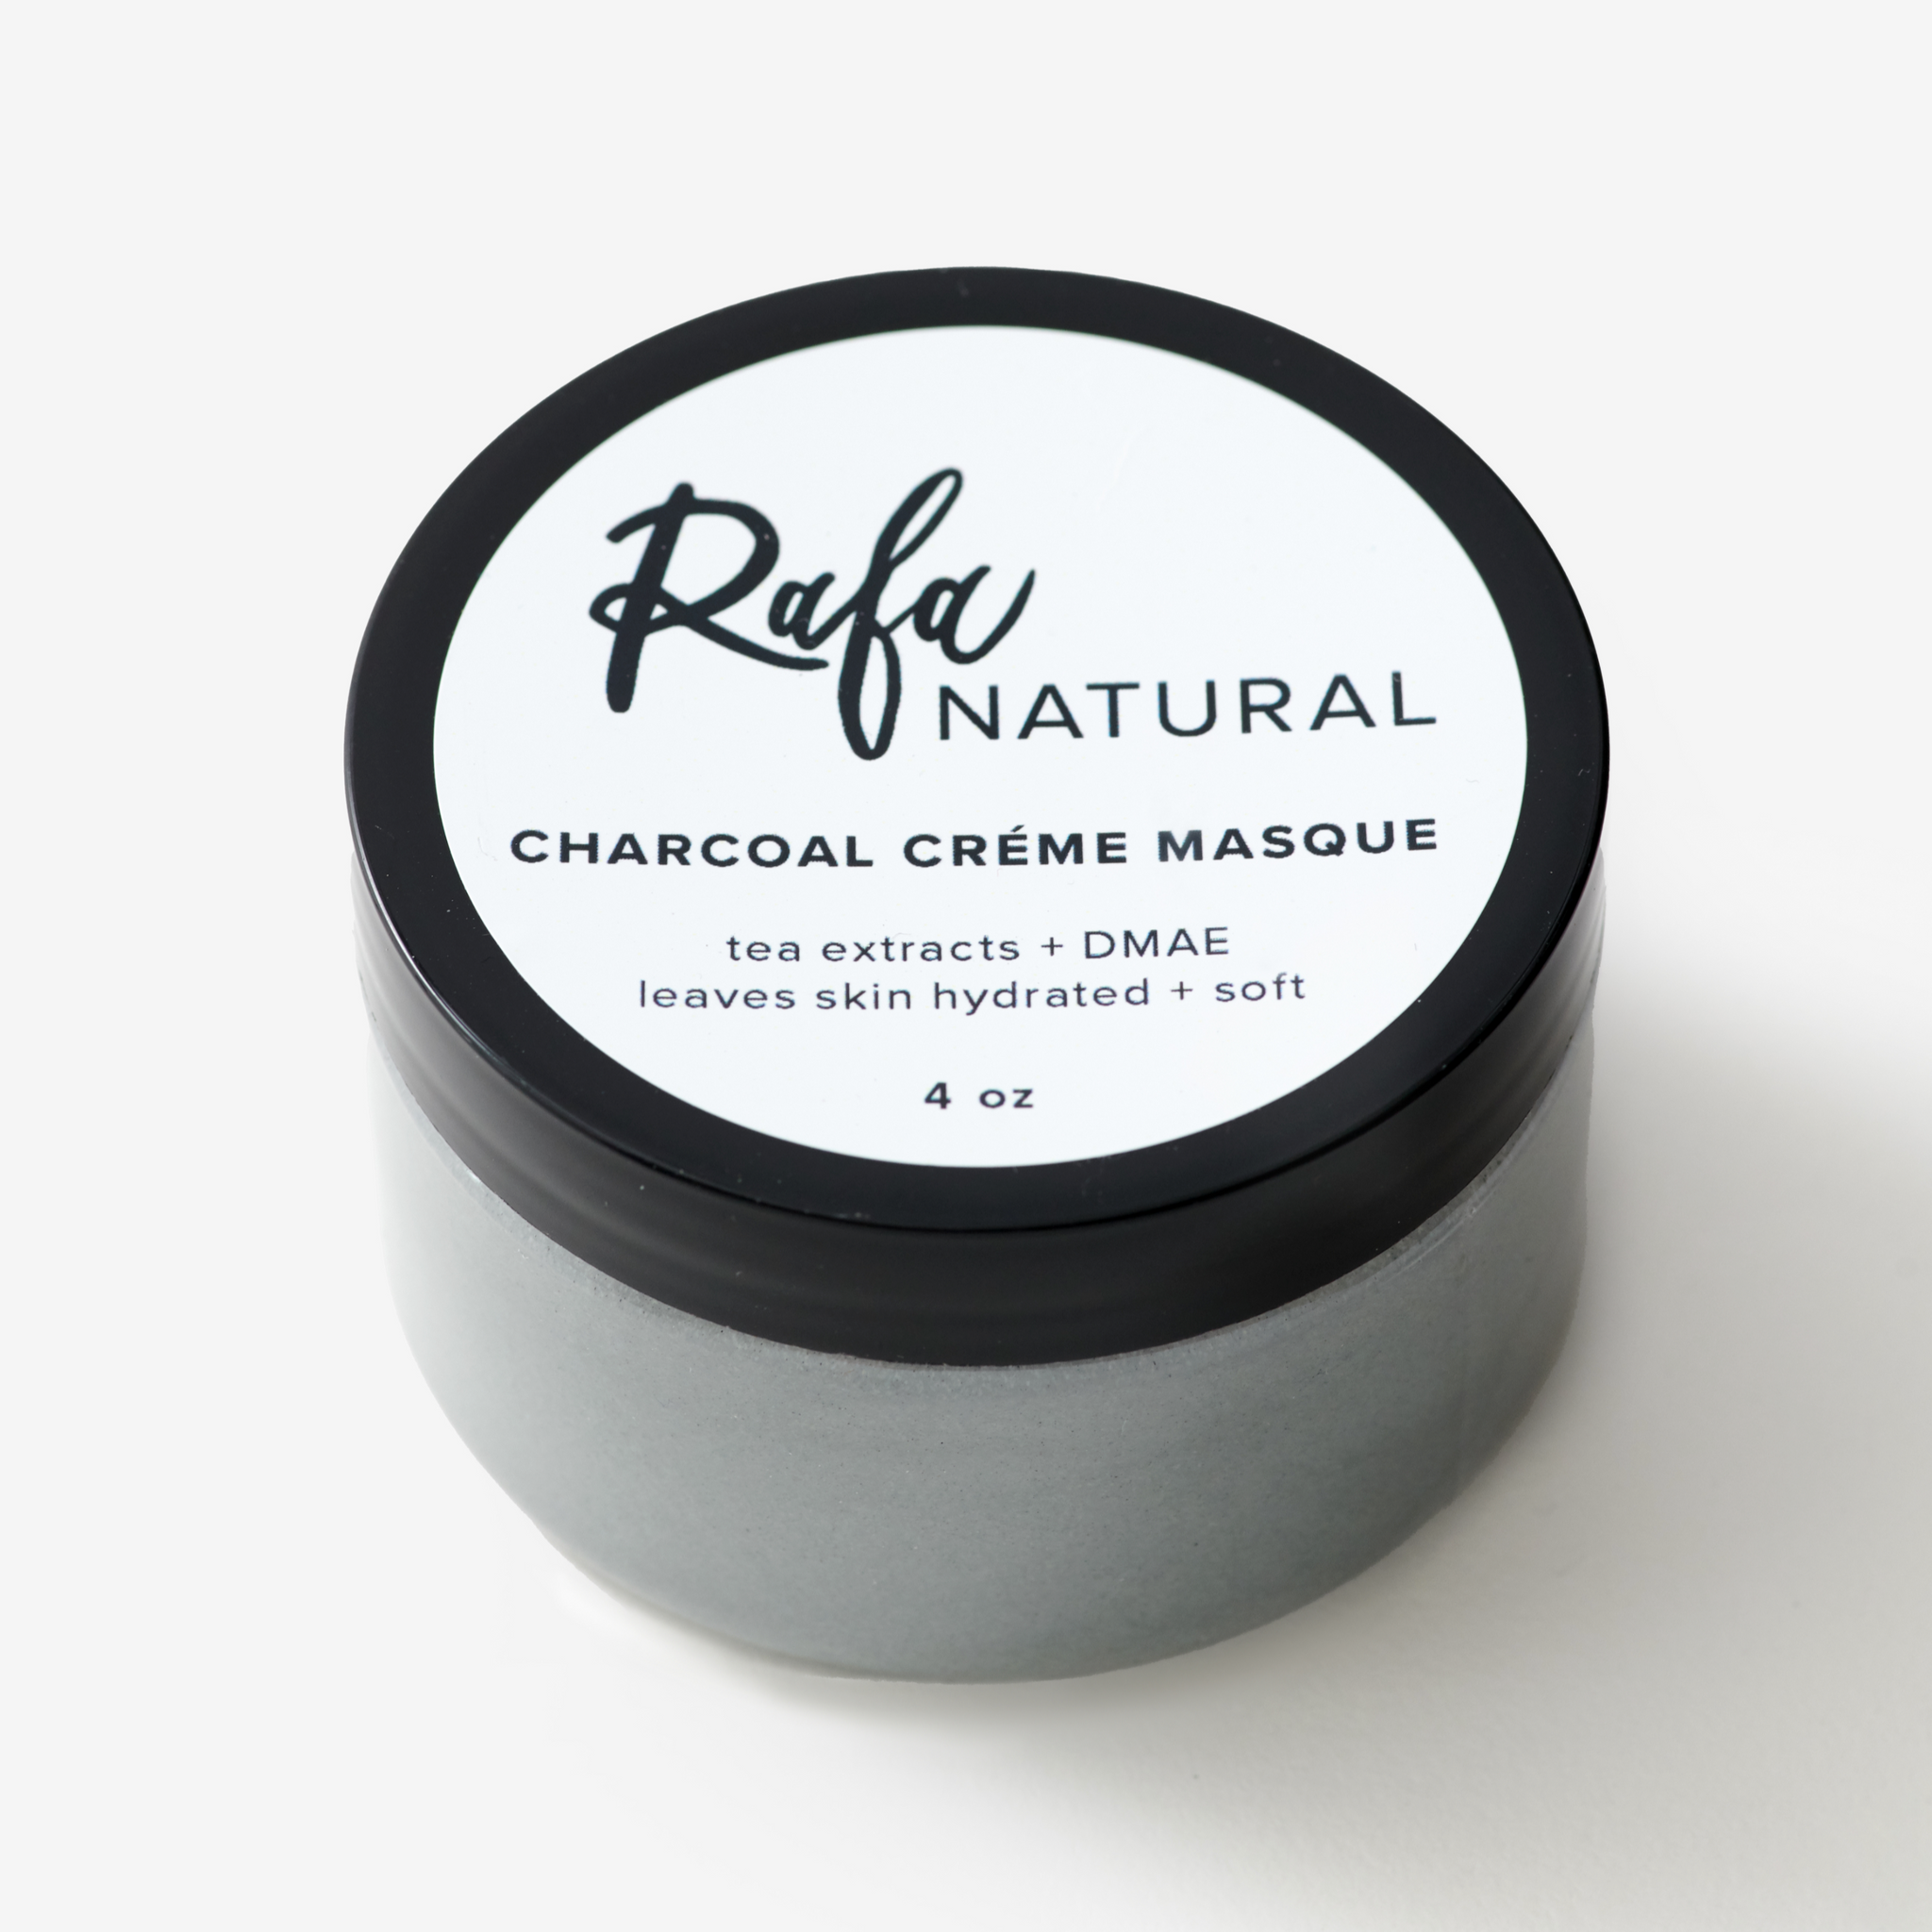 Charcoal Creme Masque by Rafa Natural